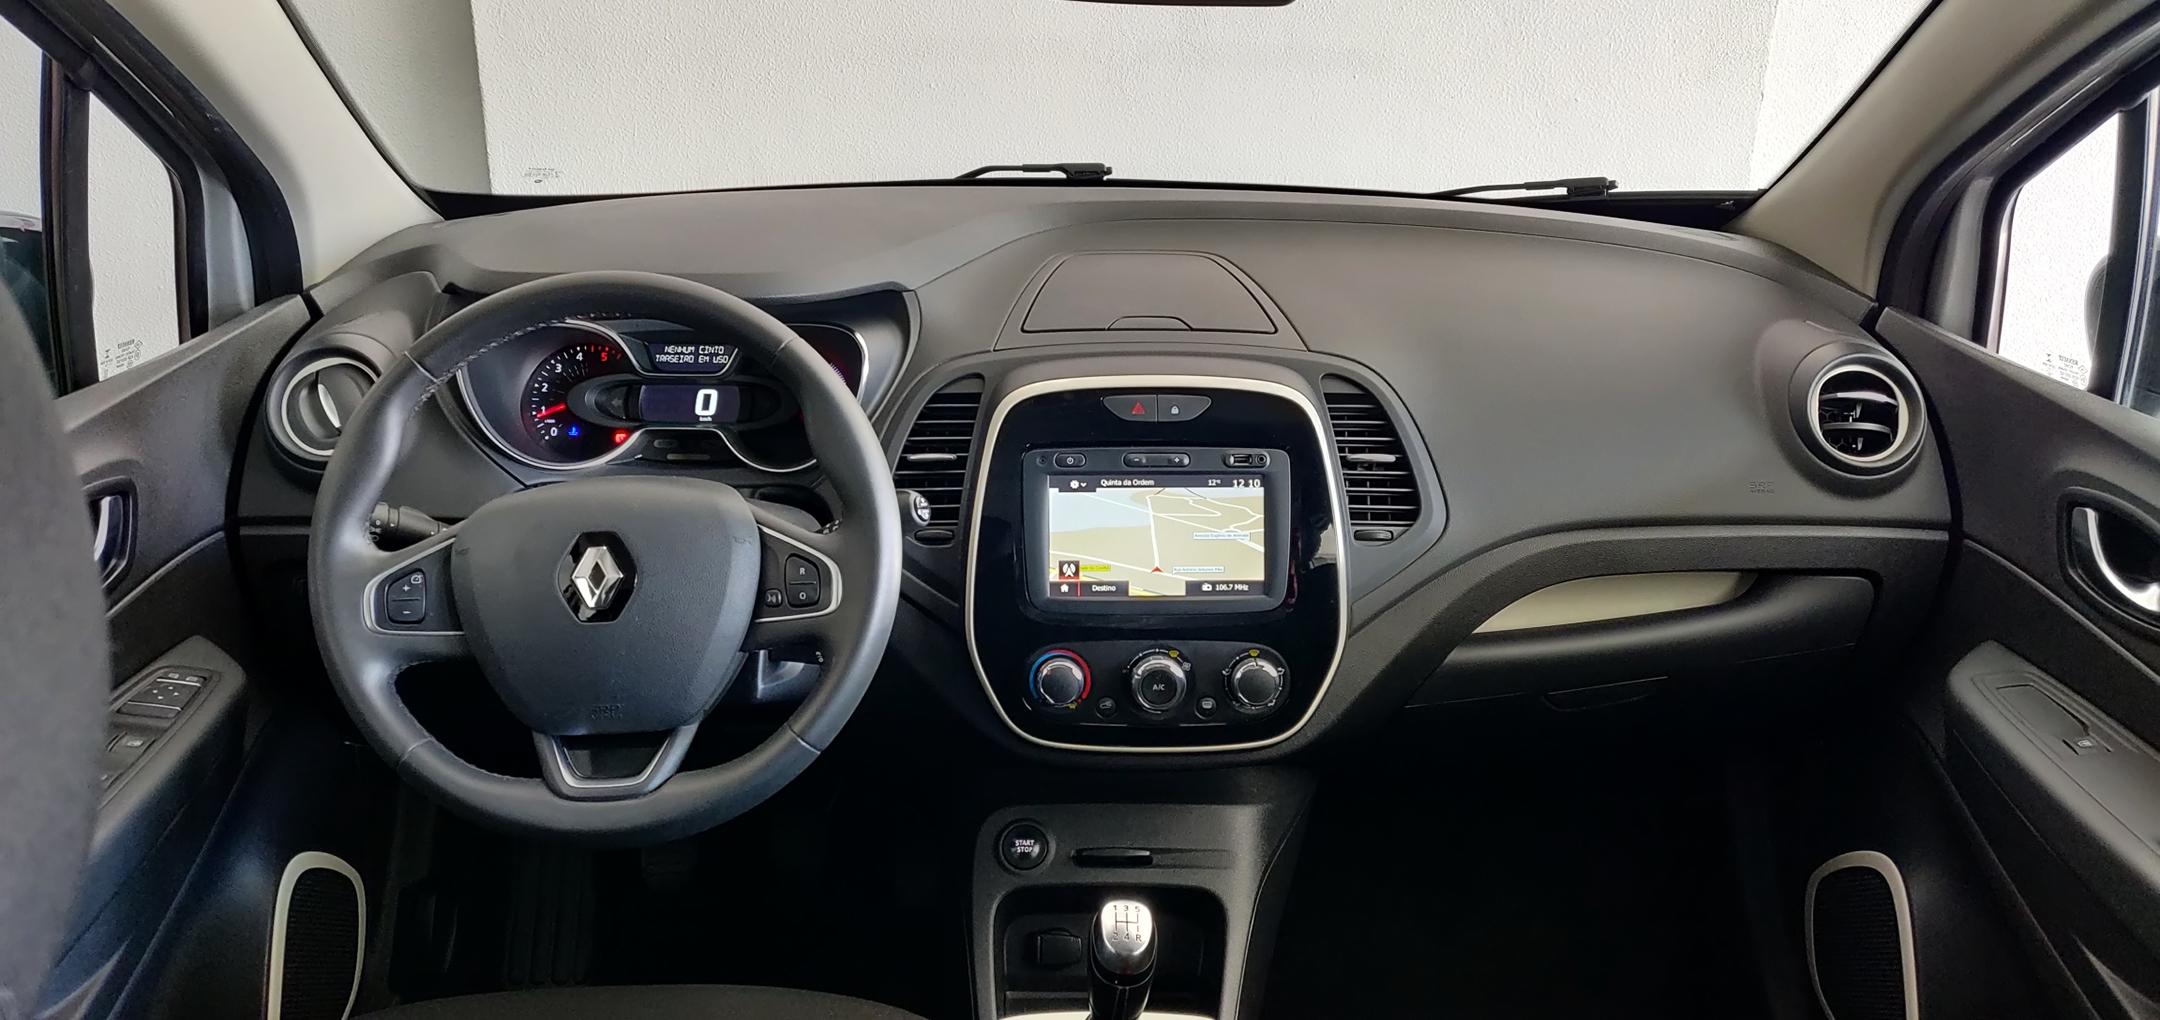 Renault Captur 1.5 Dci | Imagem 9